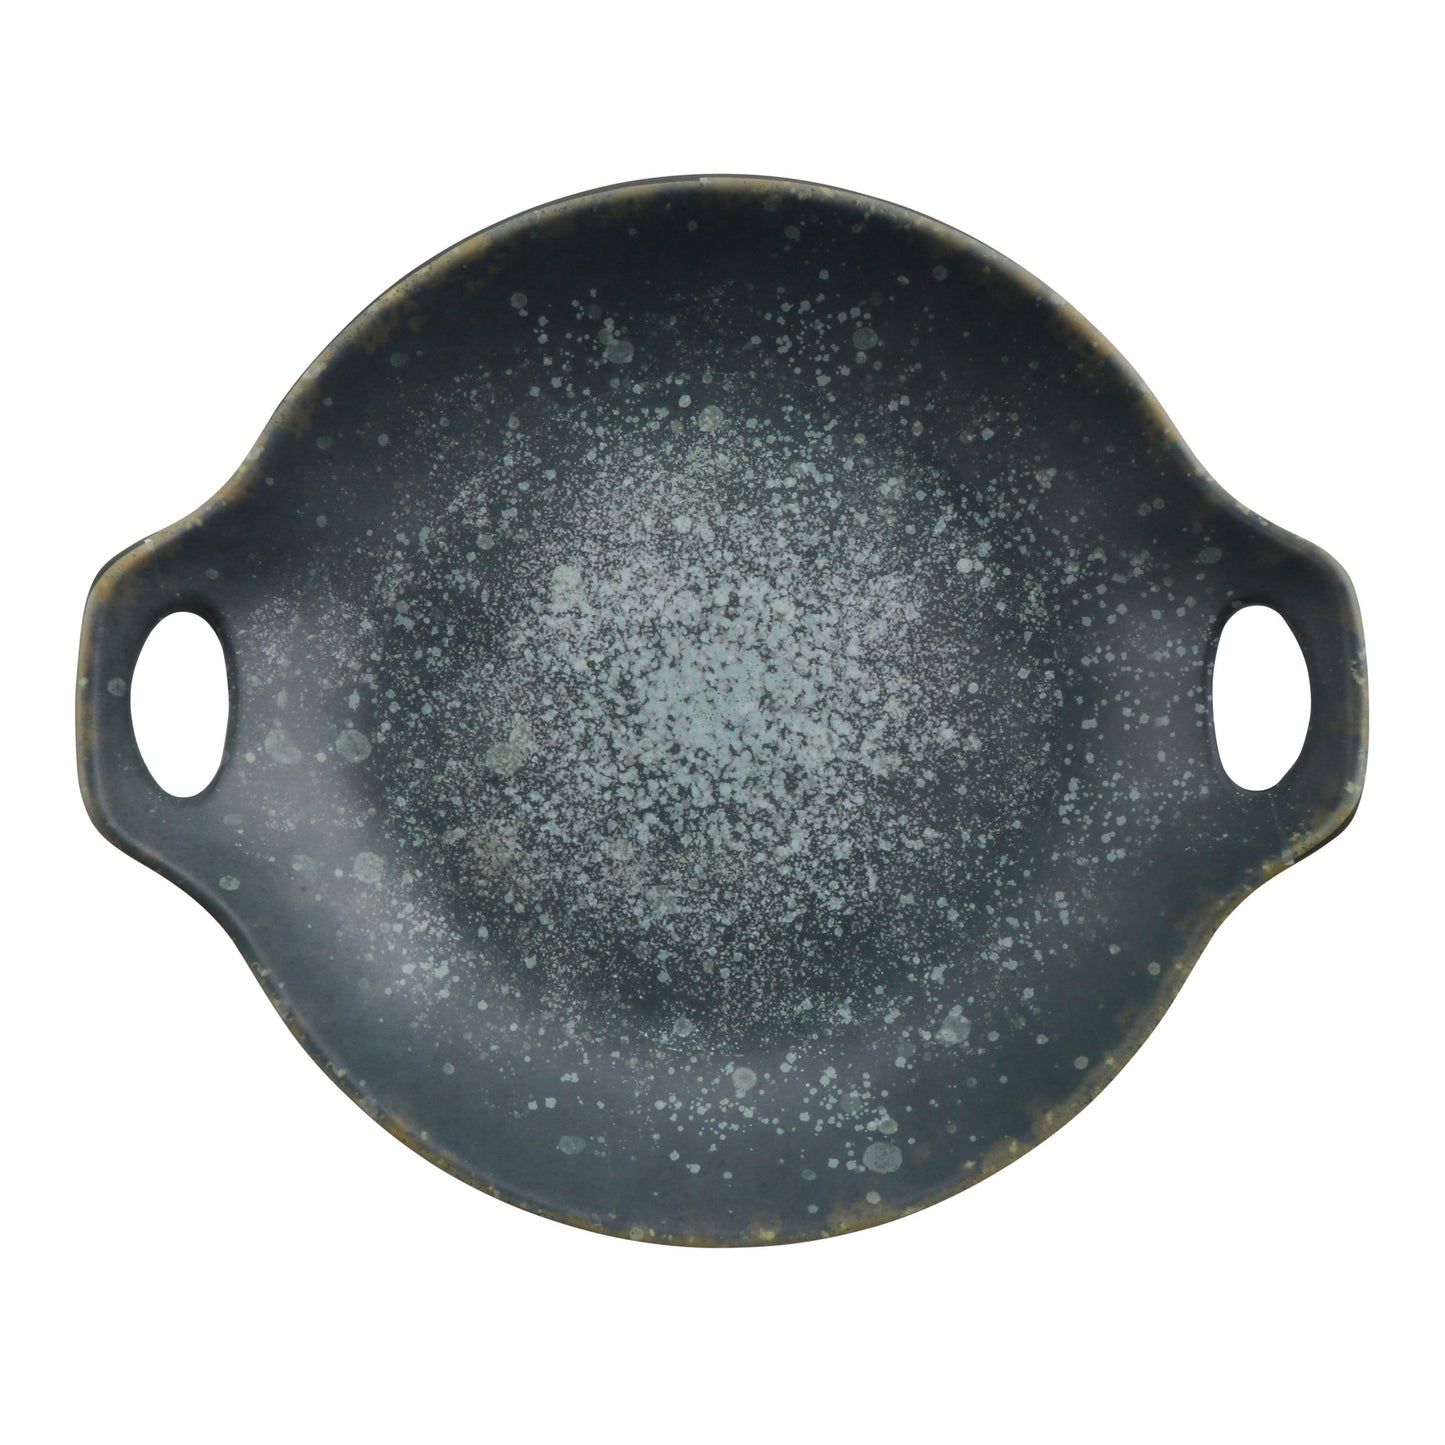 7.75 oz savor dusk melamine mini wok with handles, 9.06"L x 7.75"W x 1.63"H, GET, cheforward